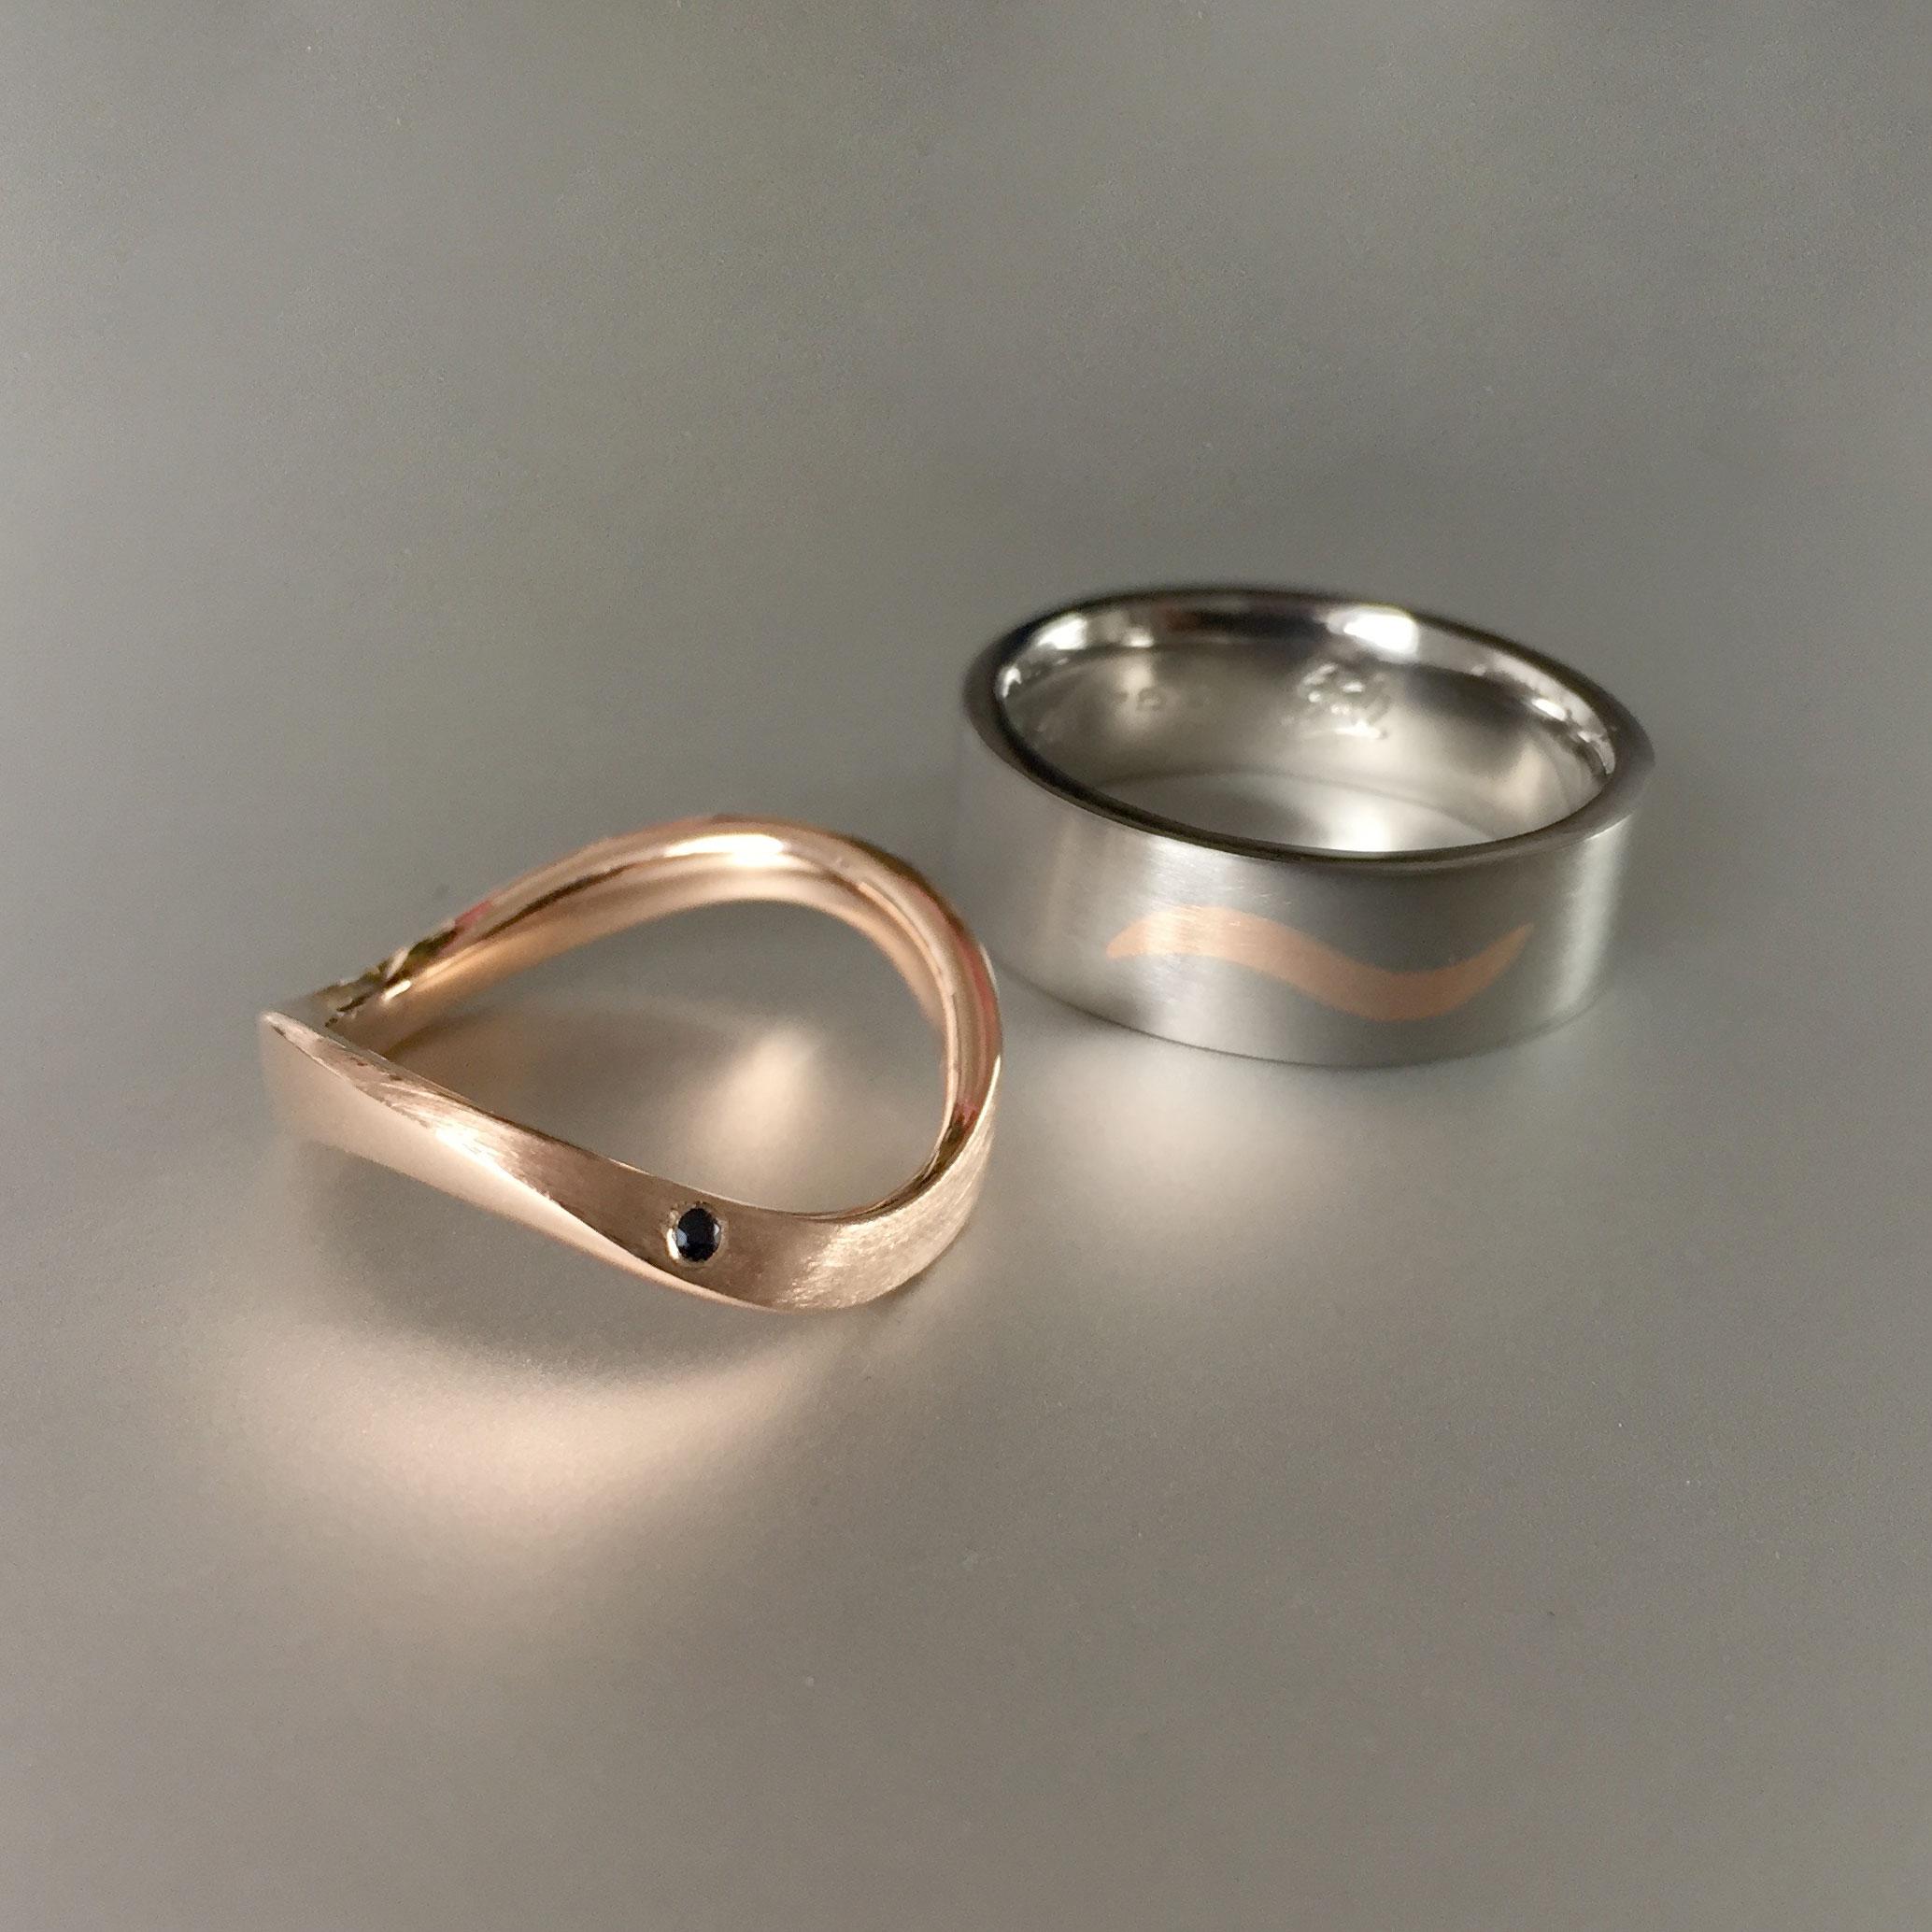 Rose gold and titanium wedding rings